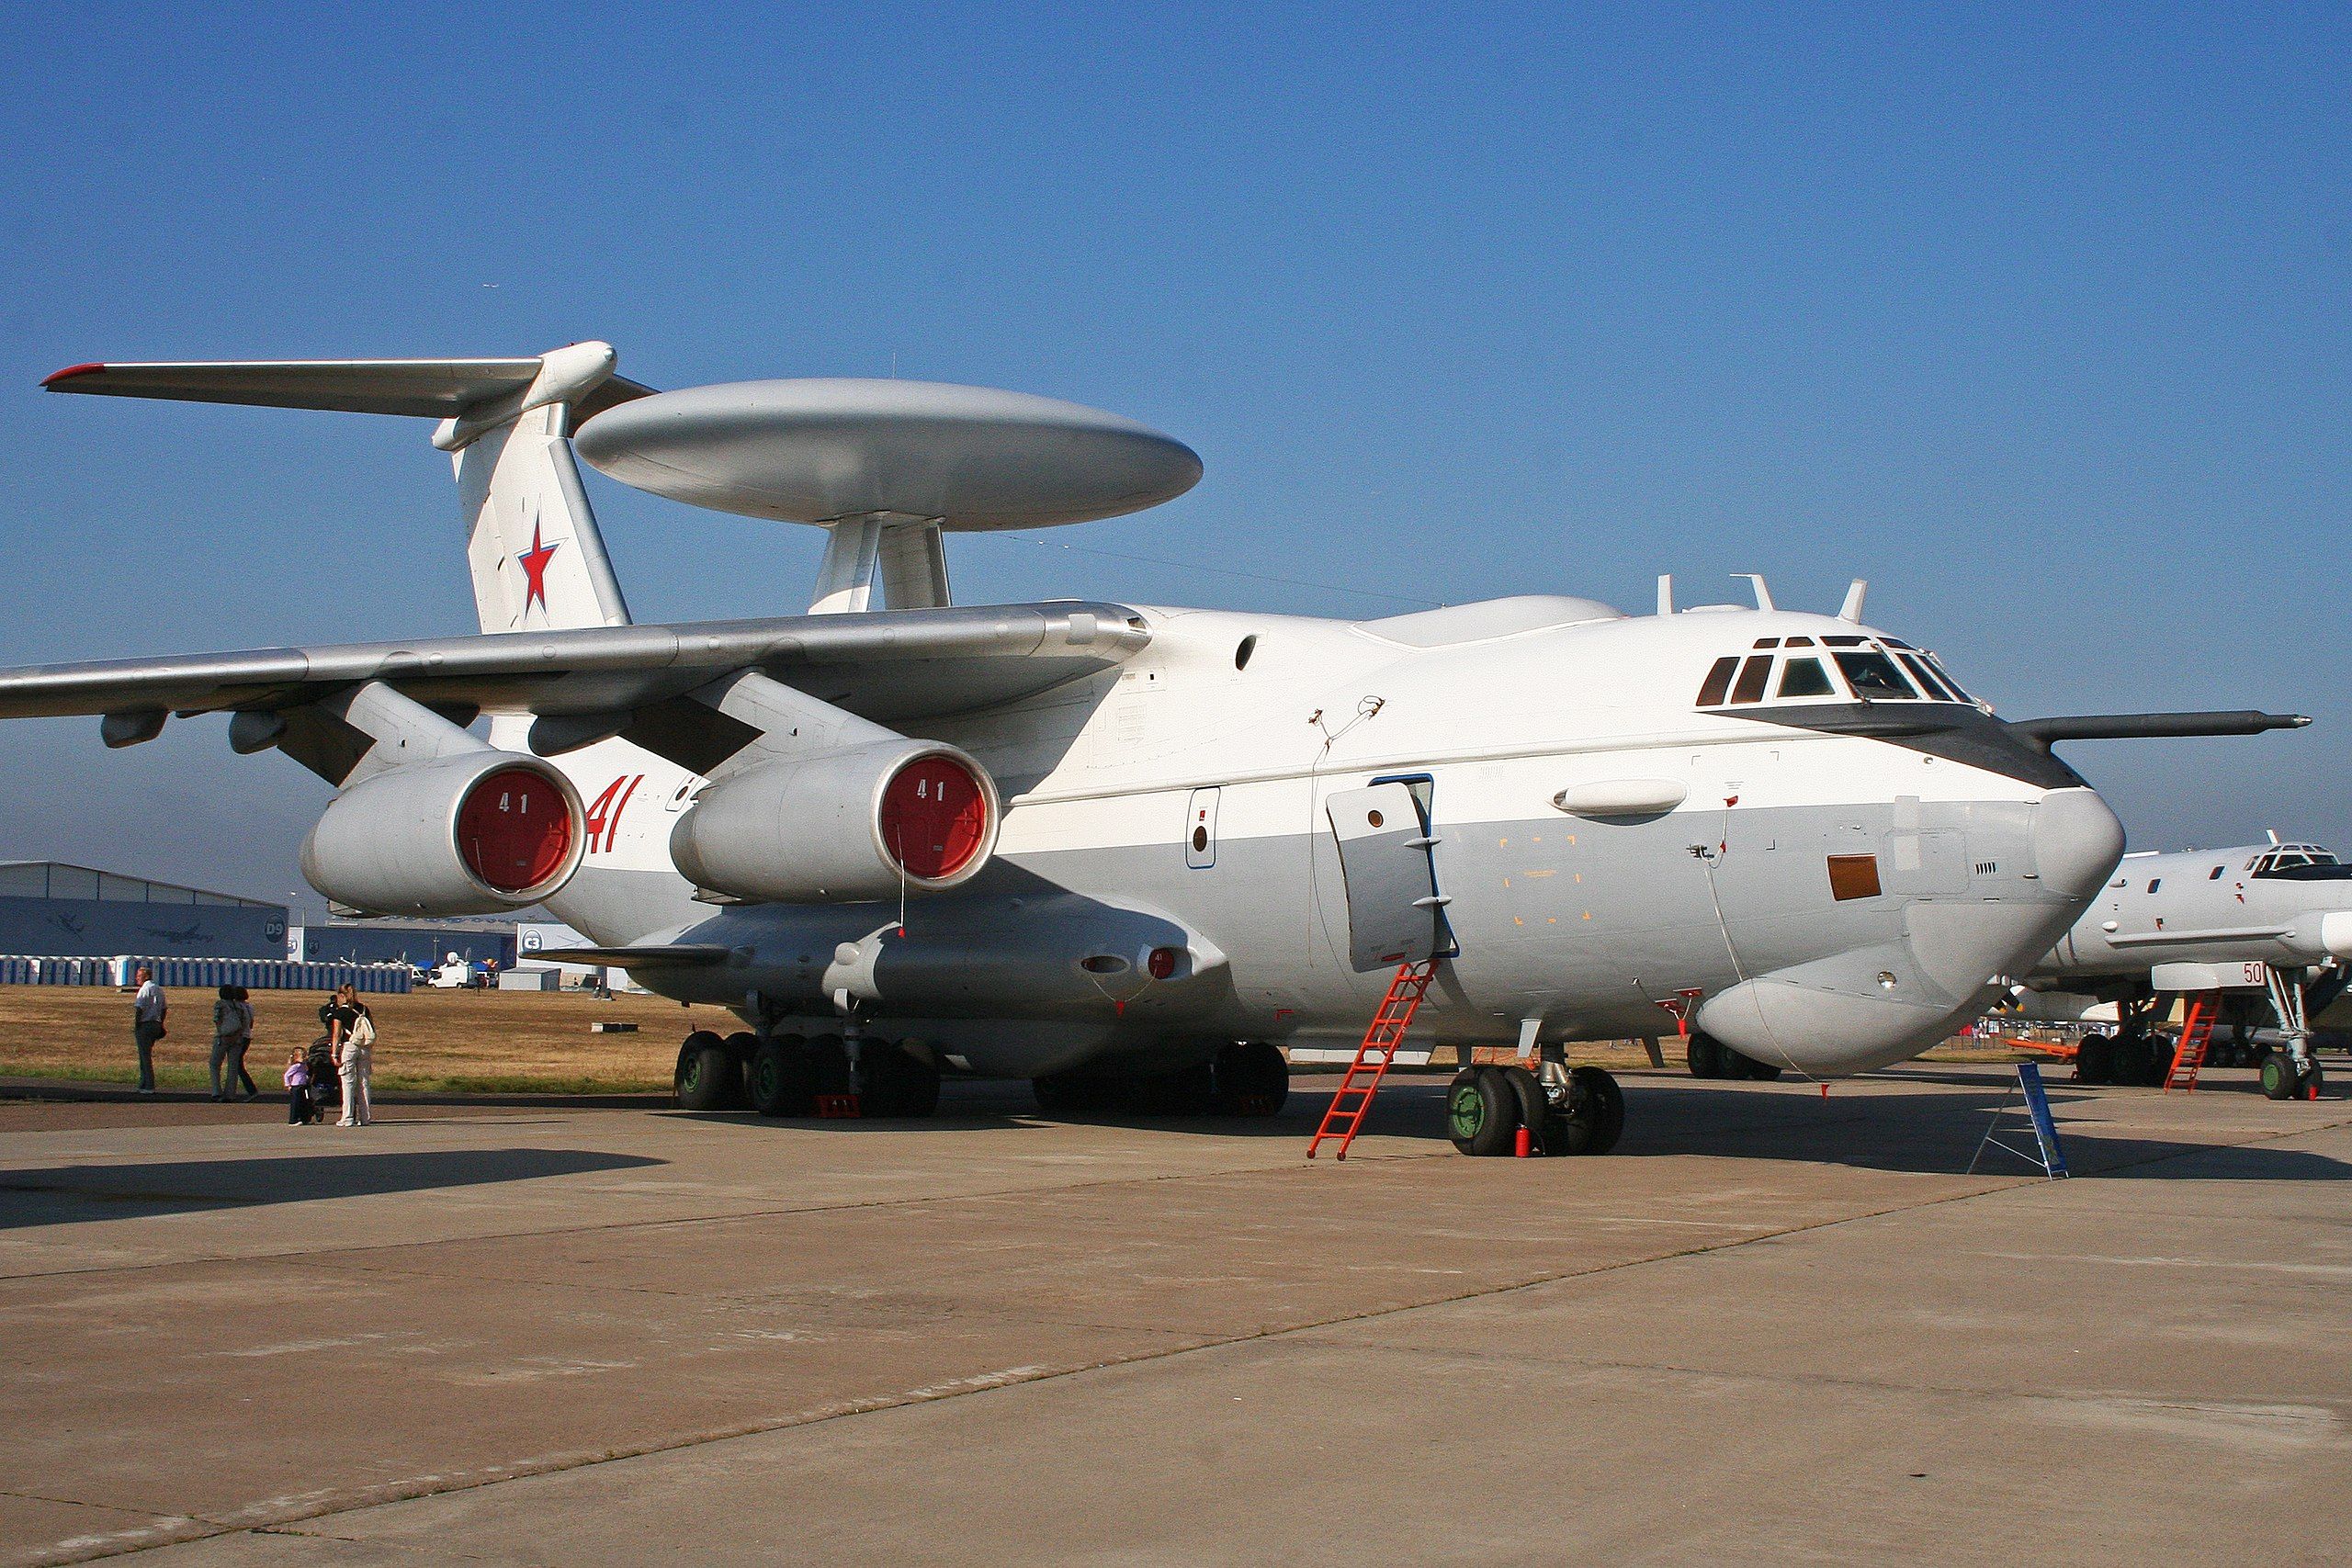 A Beriev A-50 aircraft parked at an airfield.